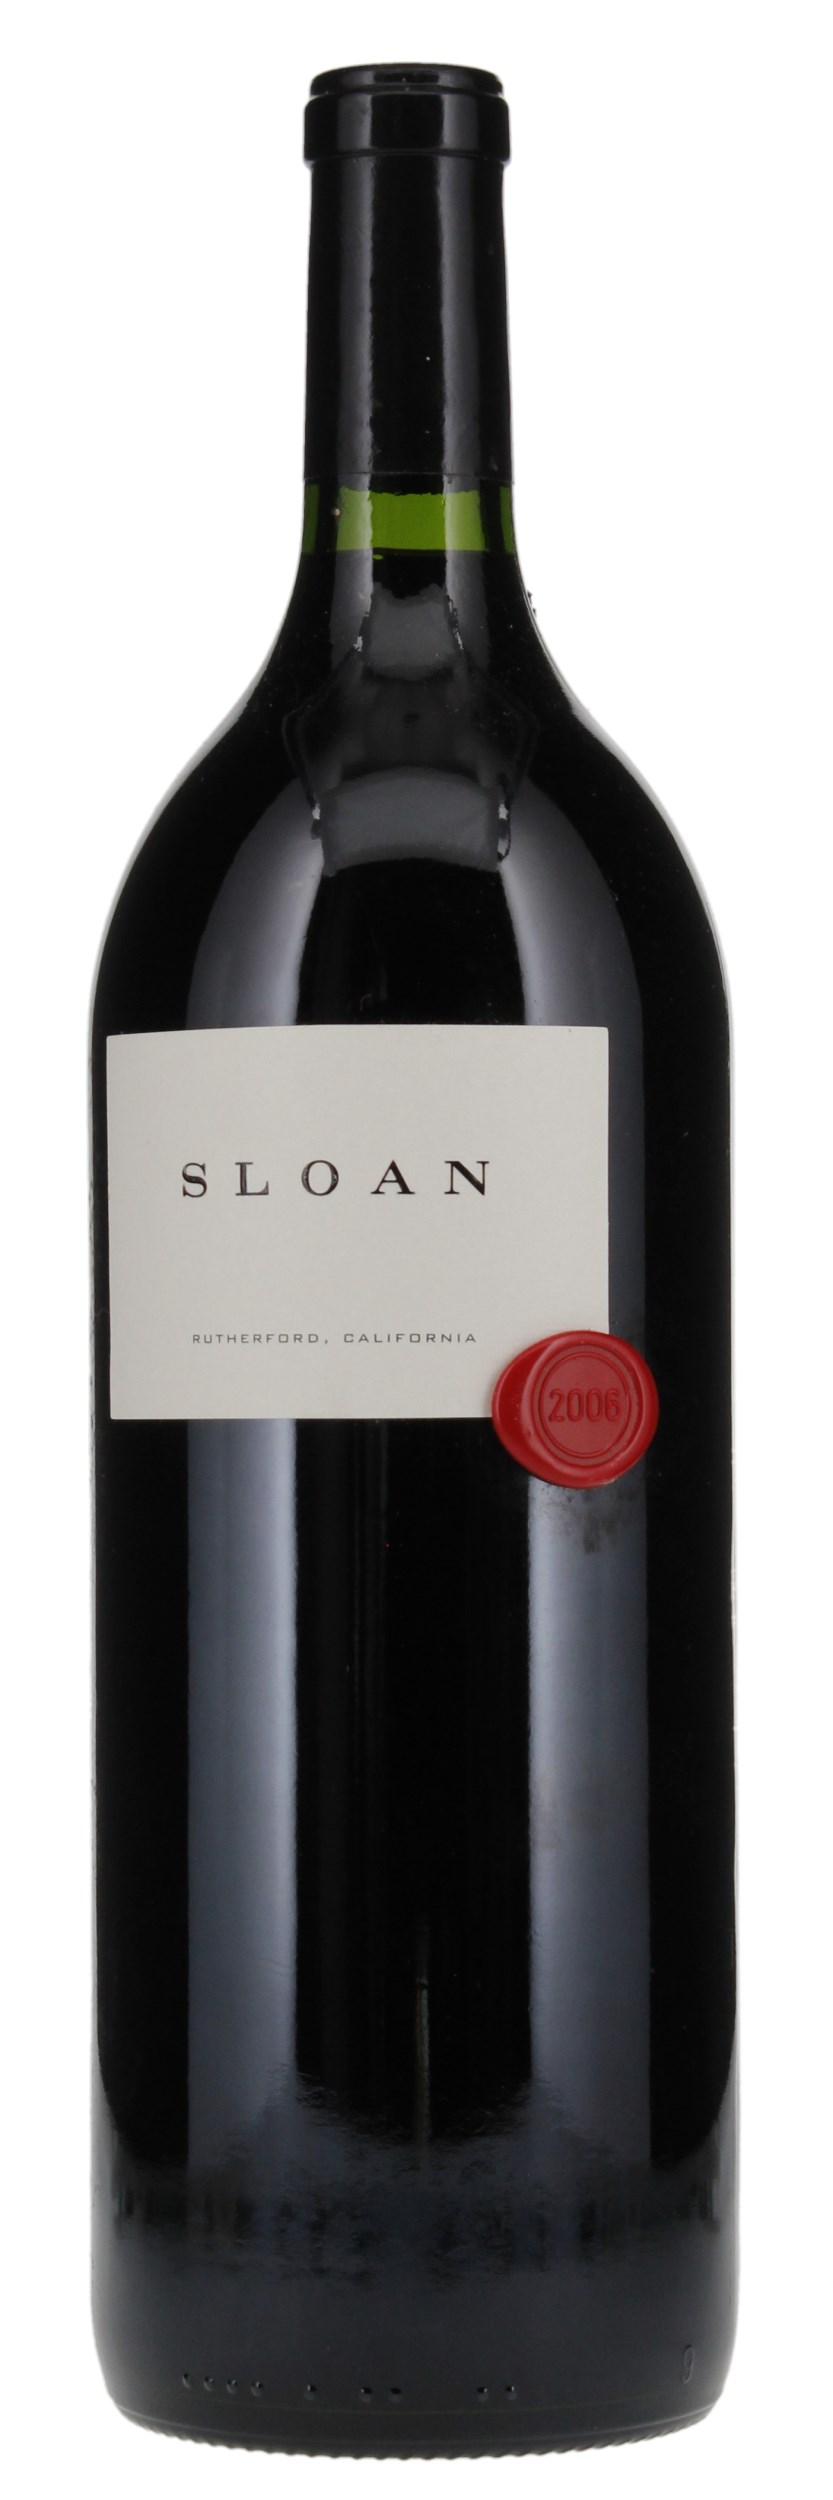 2006 Sloan Proprietary Red, 1.5ltr